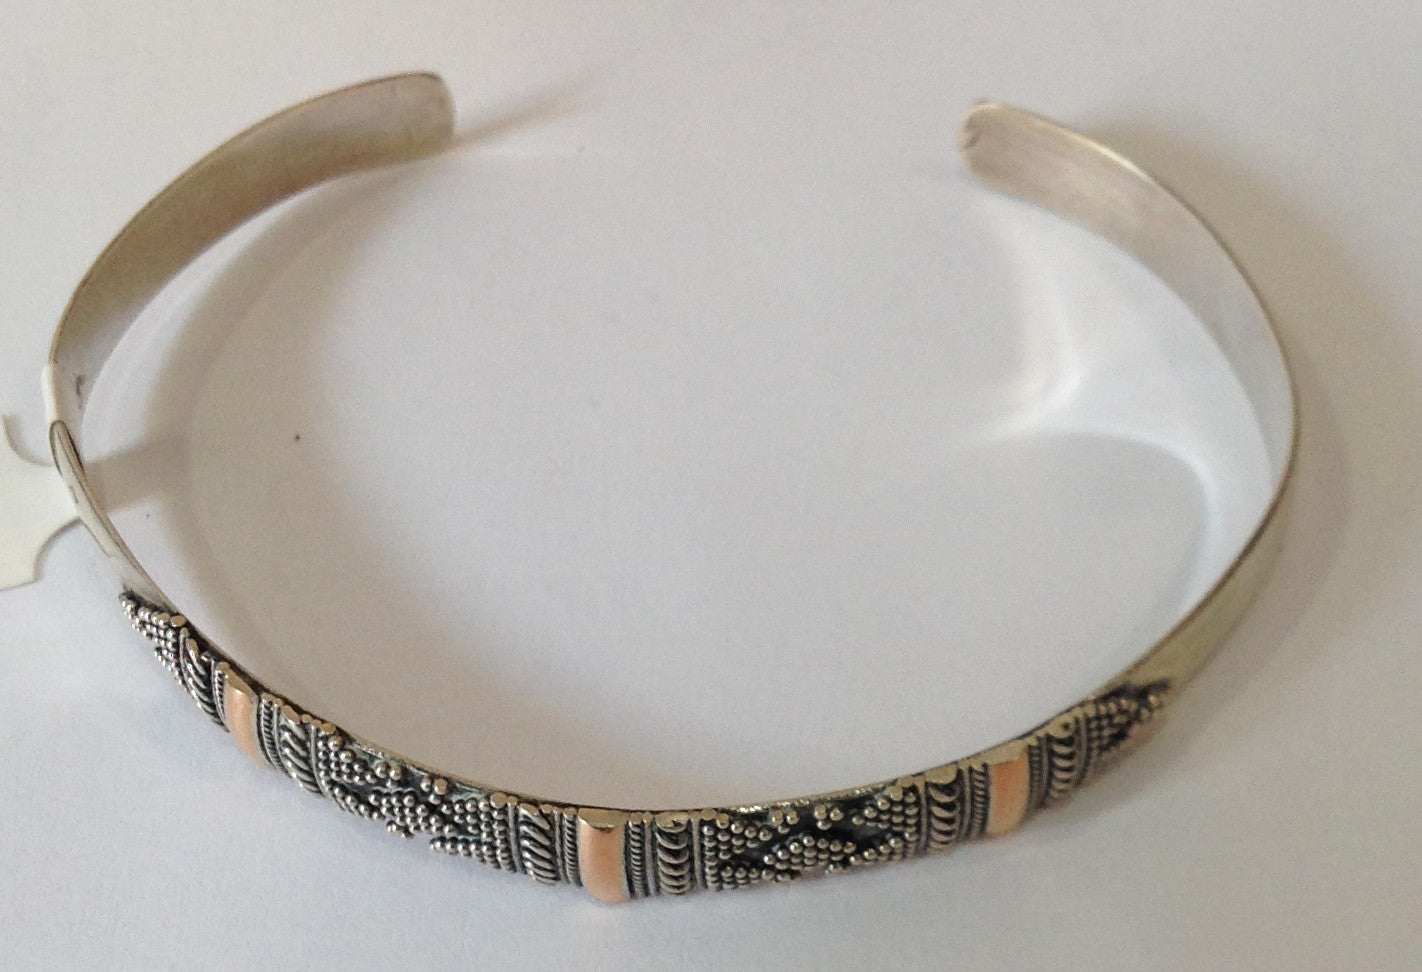 Handmade Balinese Sterling Silver and Gold Cuff Bracelet - Klara Haloho - 2